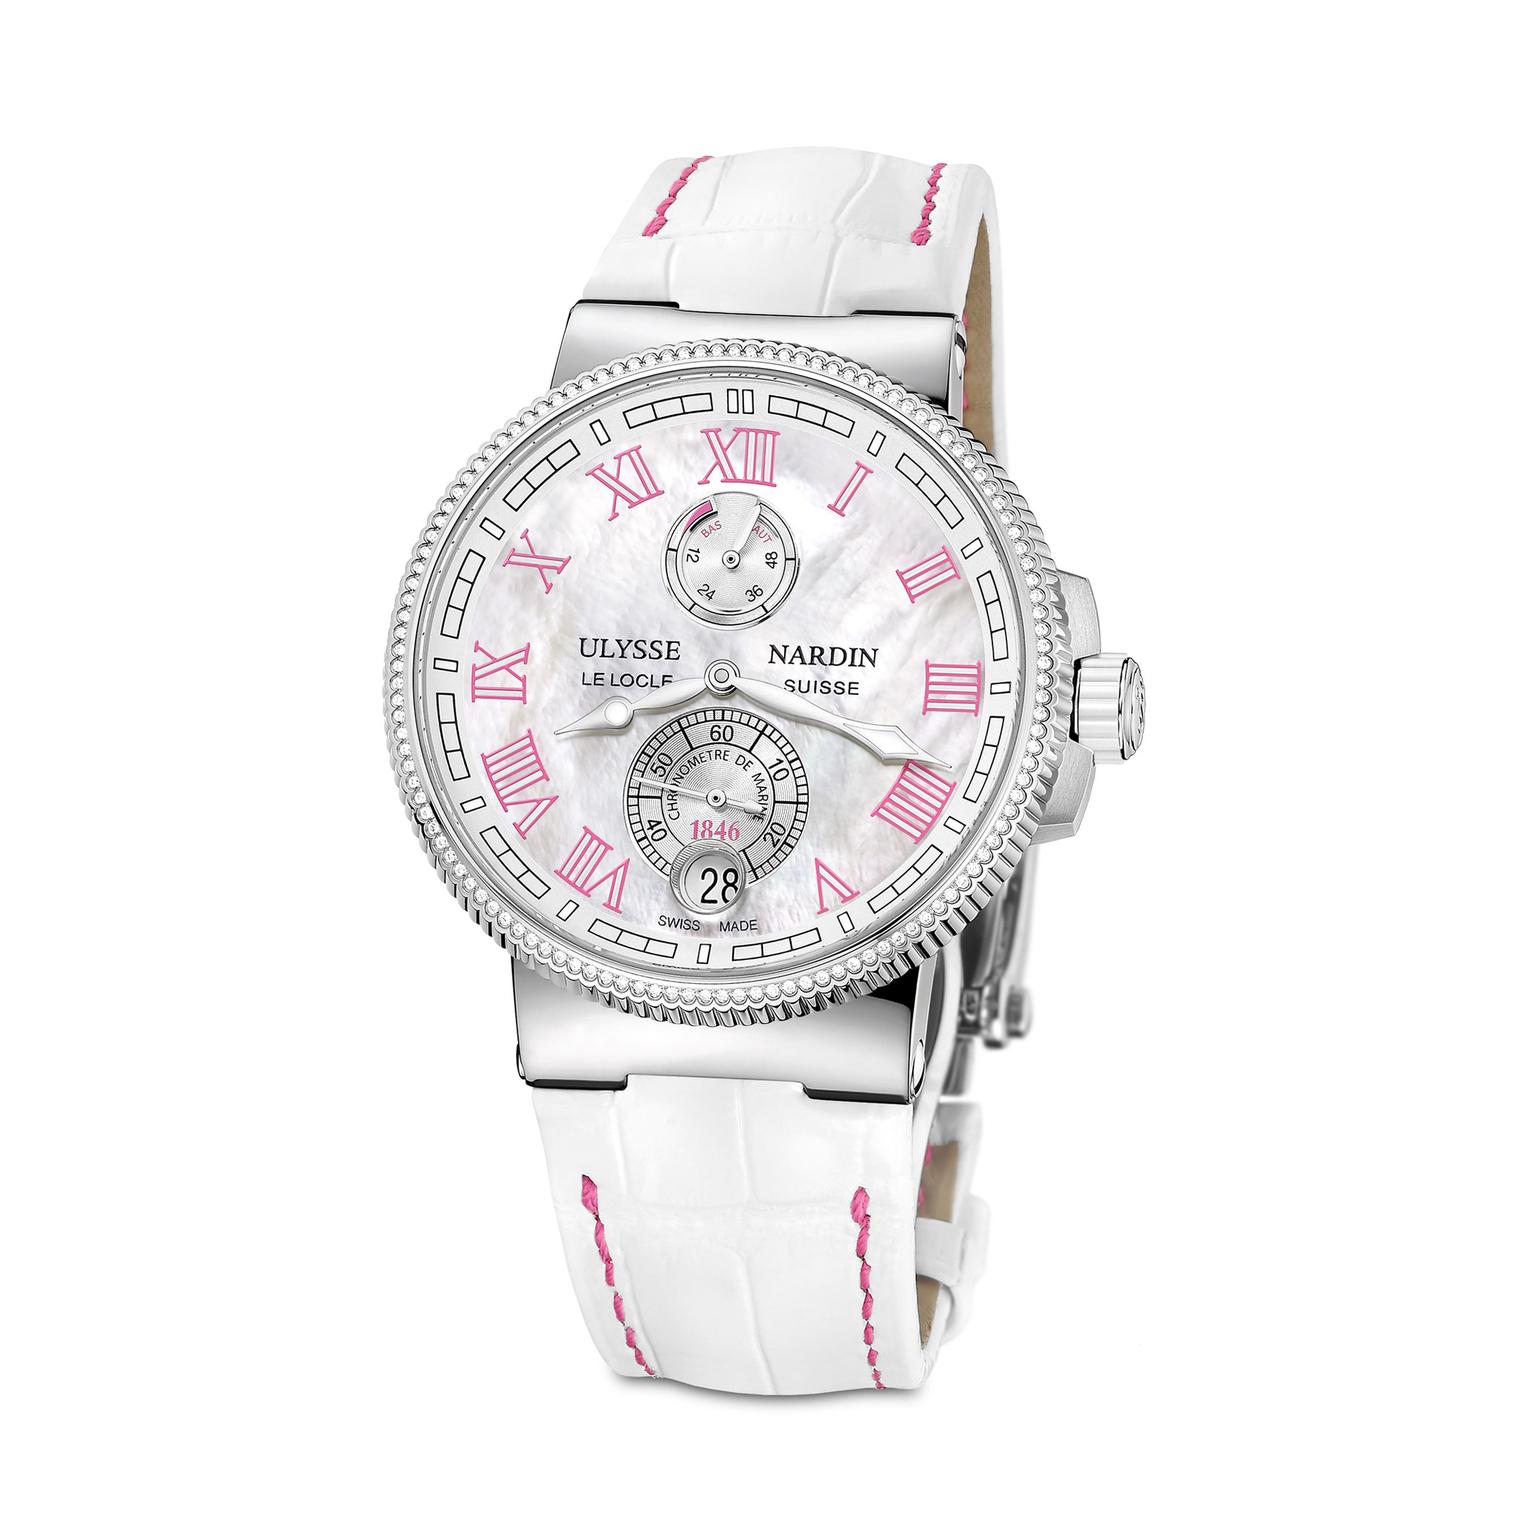 Ulysse Nardin Marine Chronometer 43mm ladies watch in pink_zoom